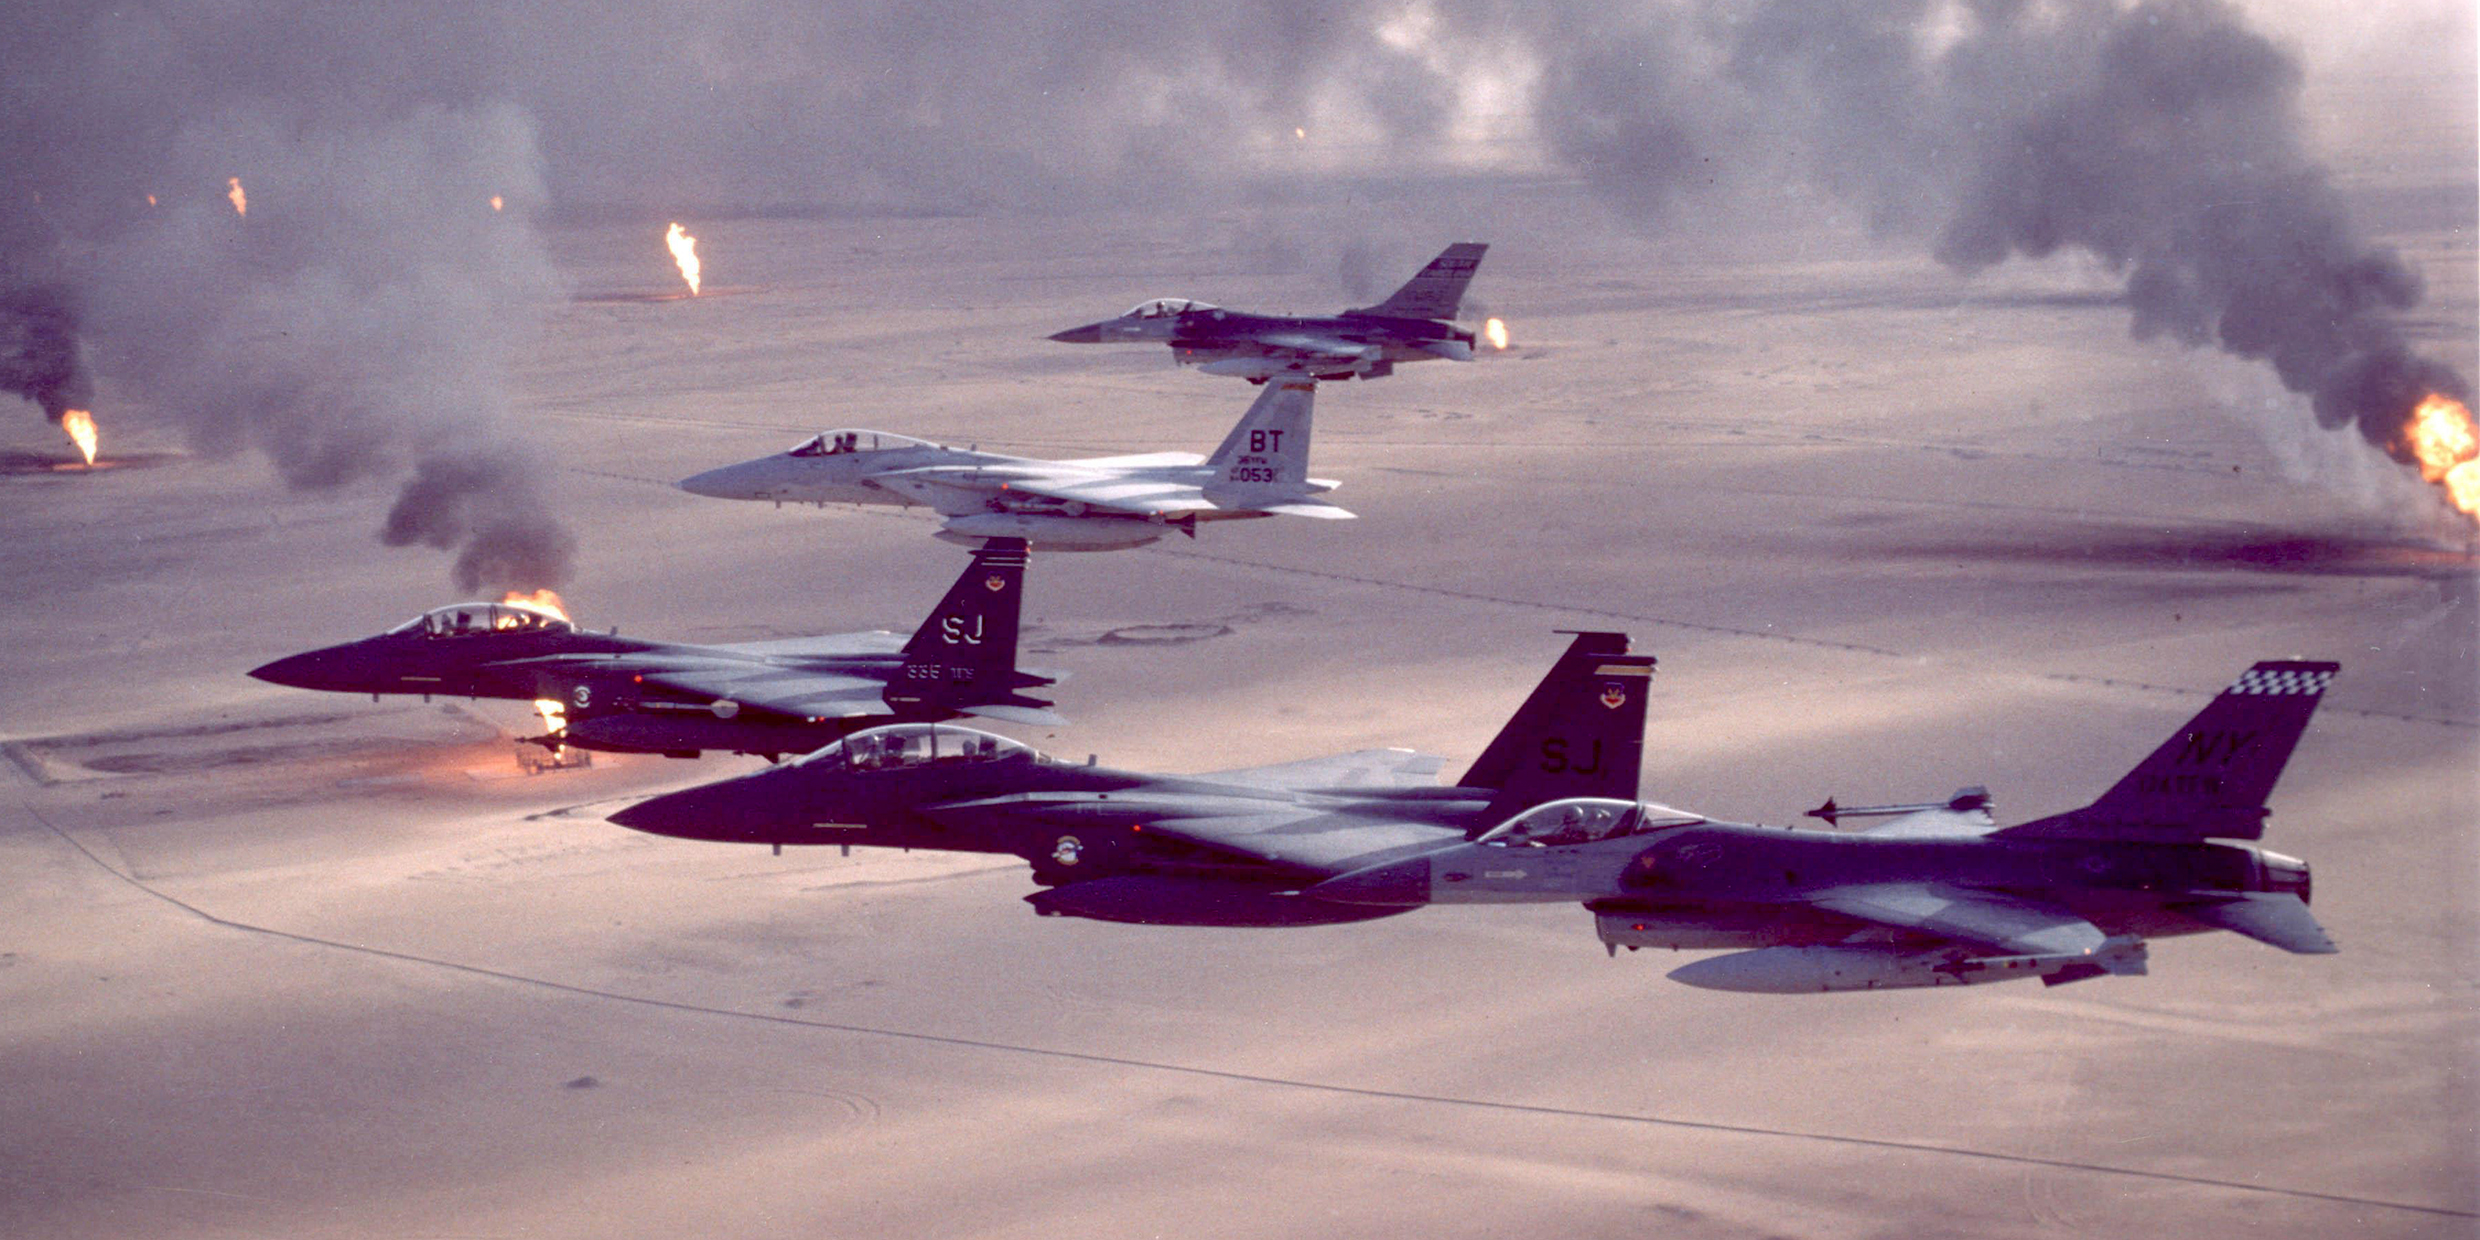 Image of fighter jets flying over desert